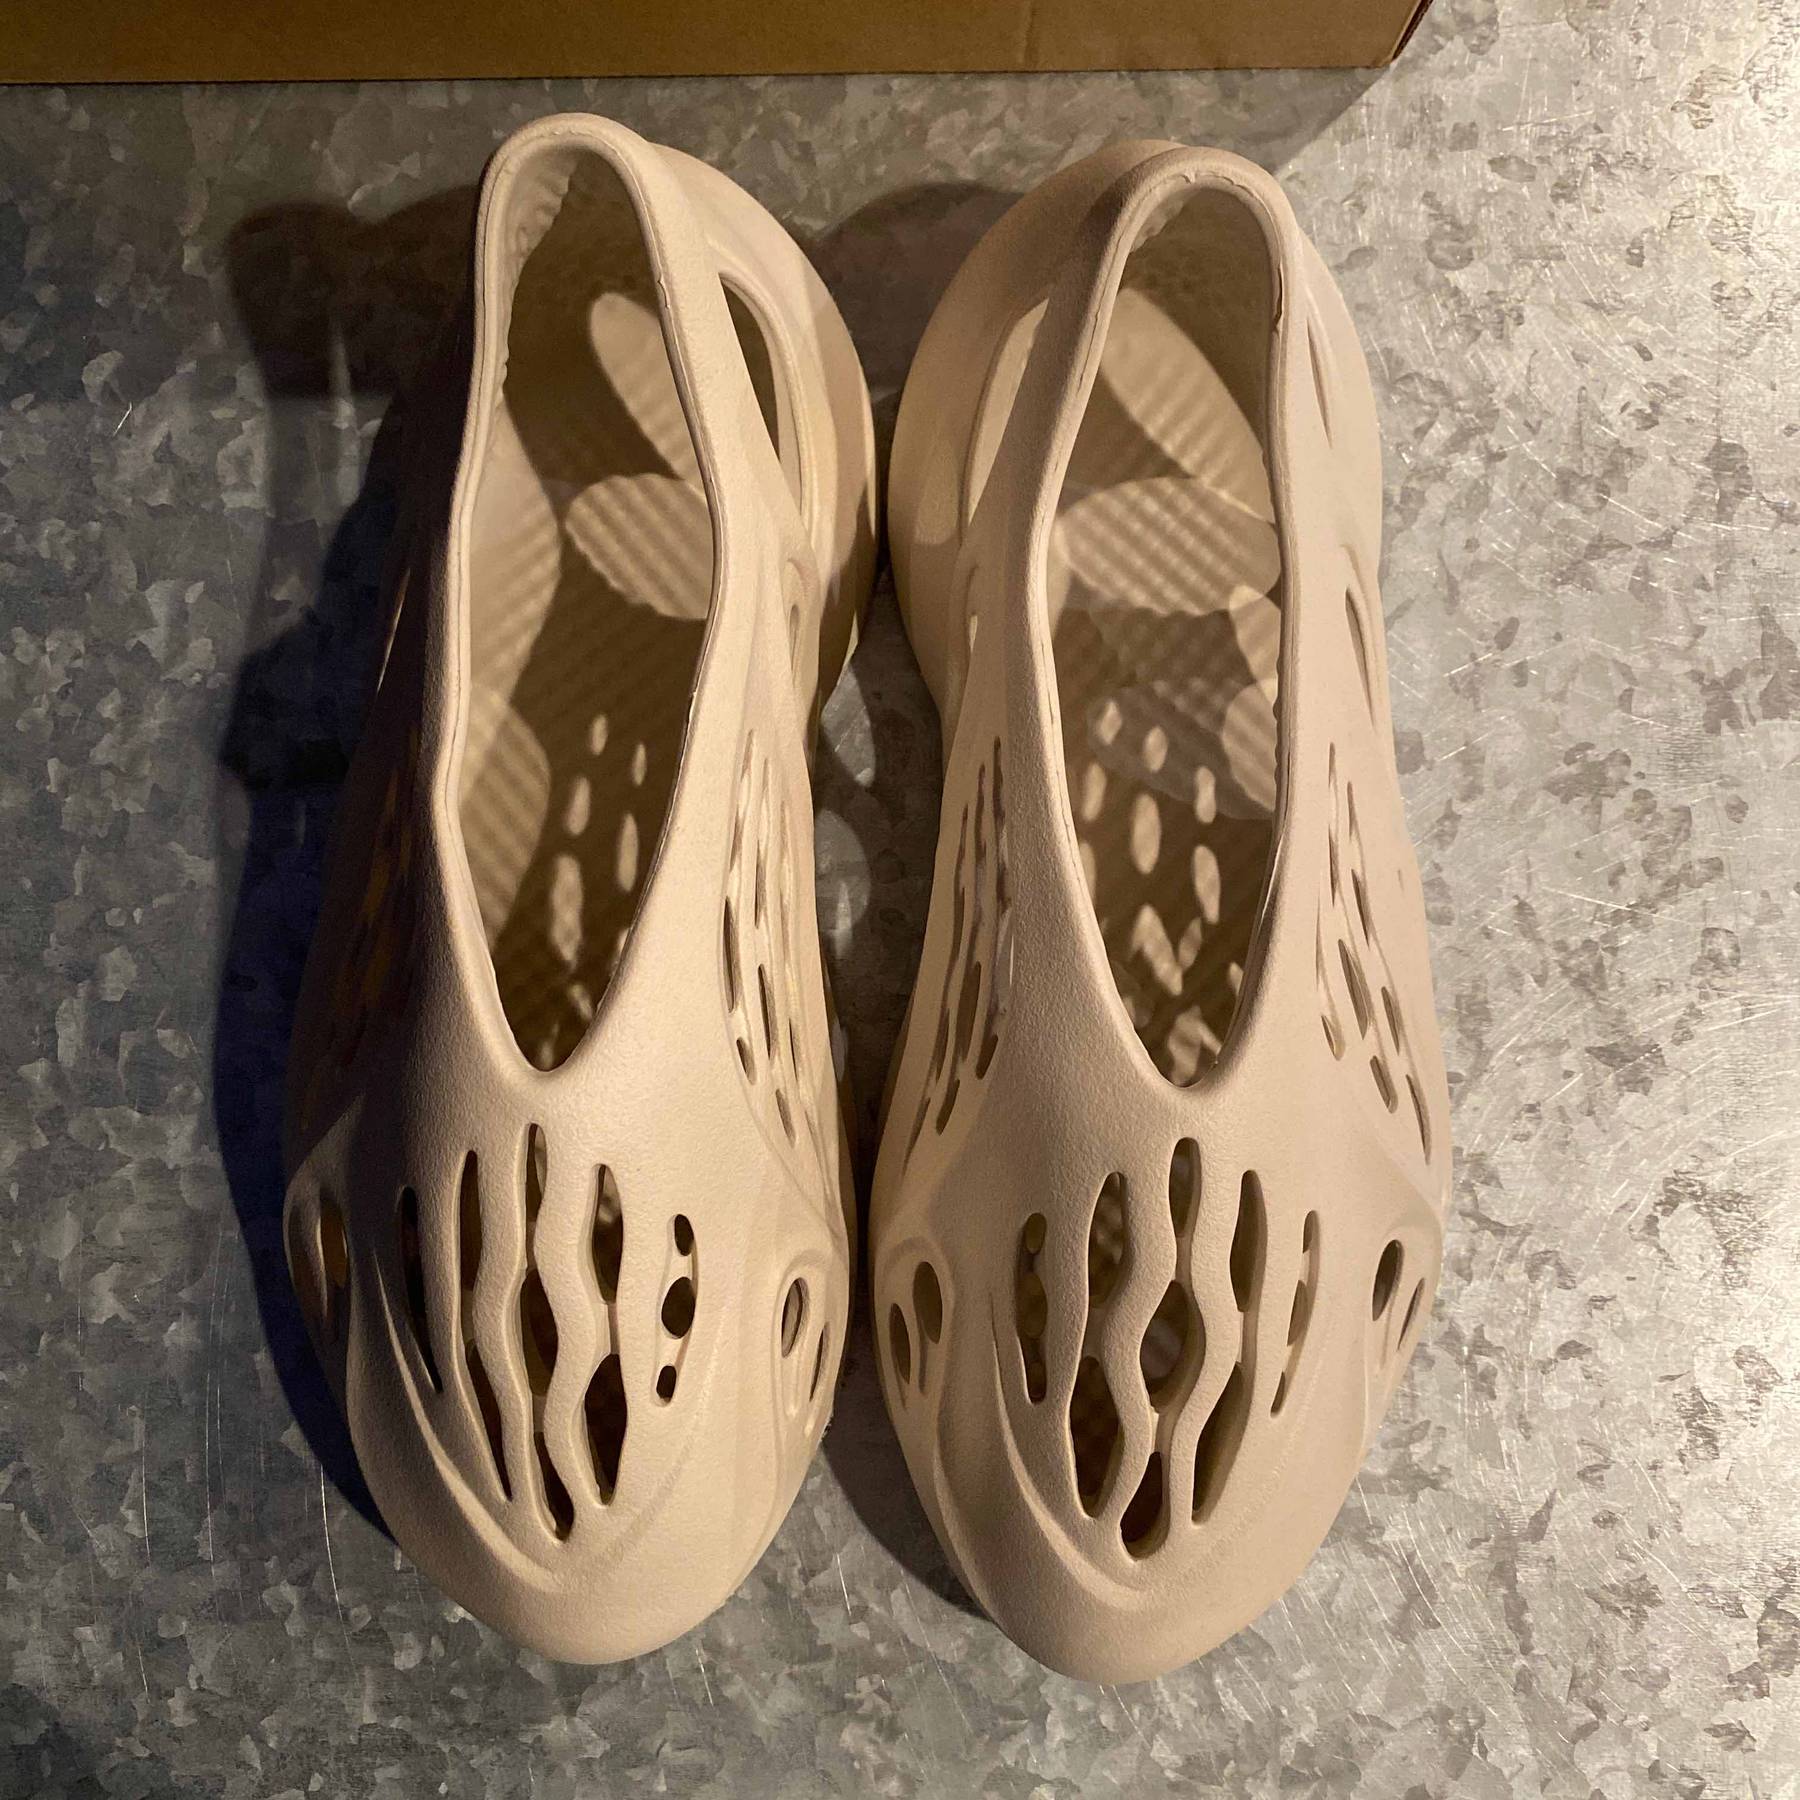 Yeezy Foam Runner 'Ararat' - adidas - G55486 | GOAT